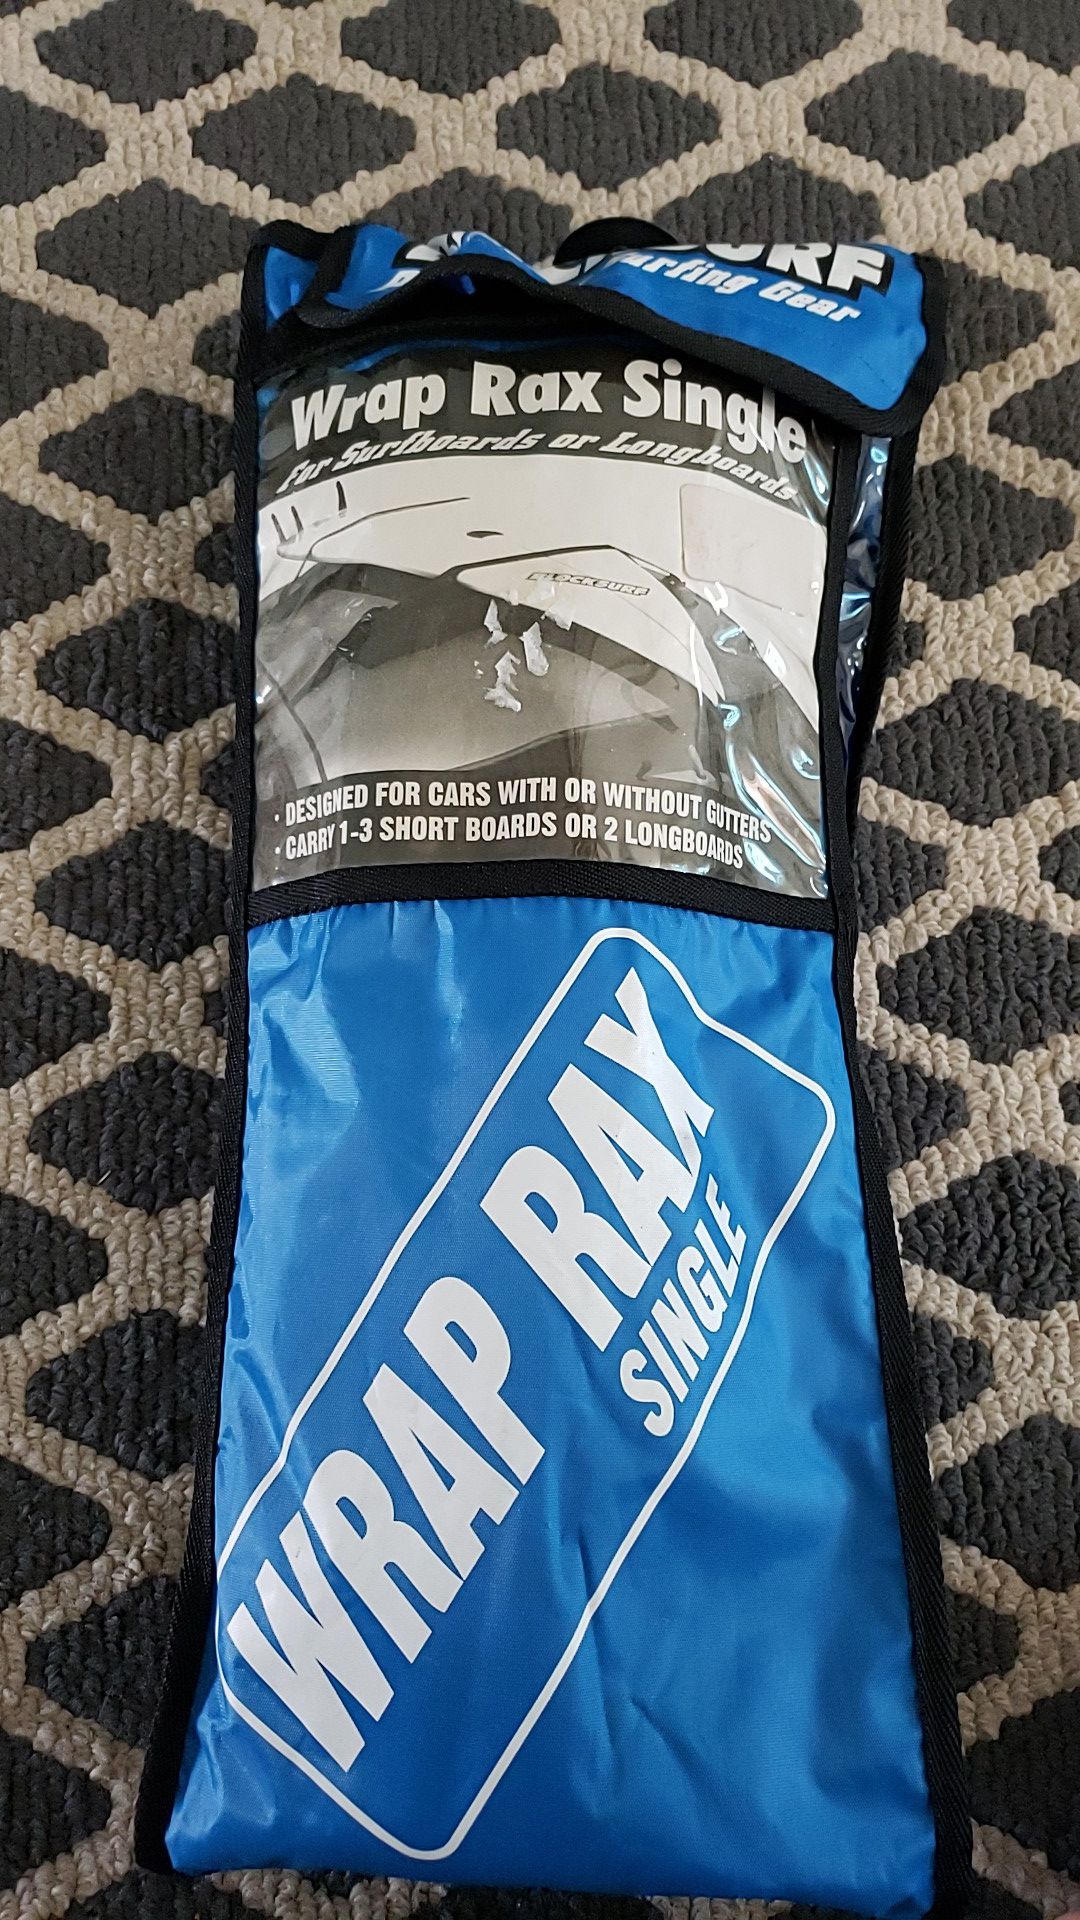 Wrap rax single